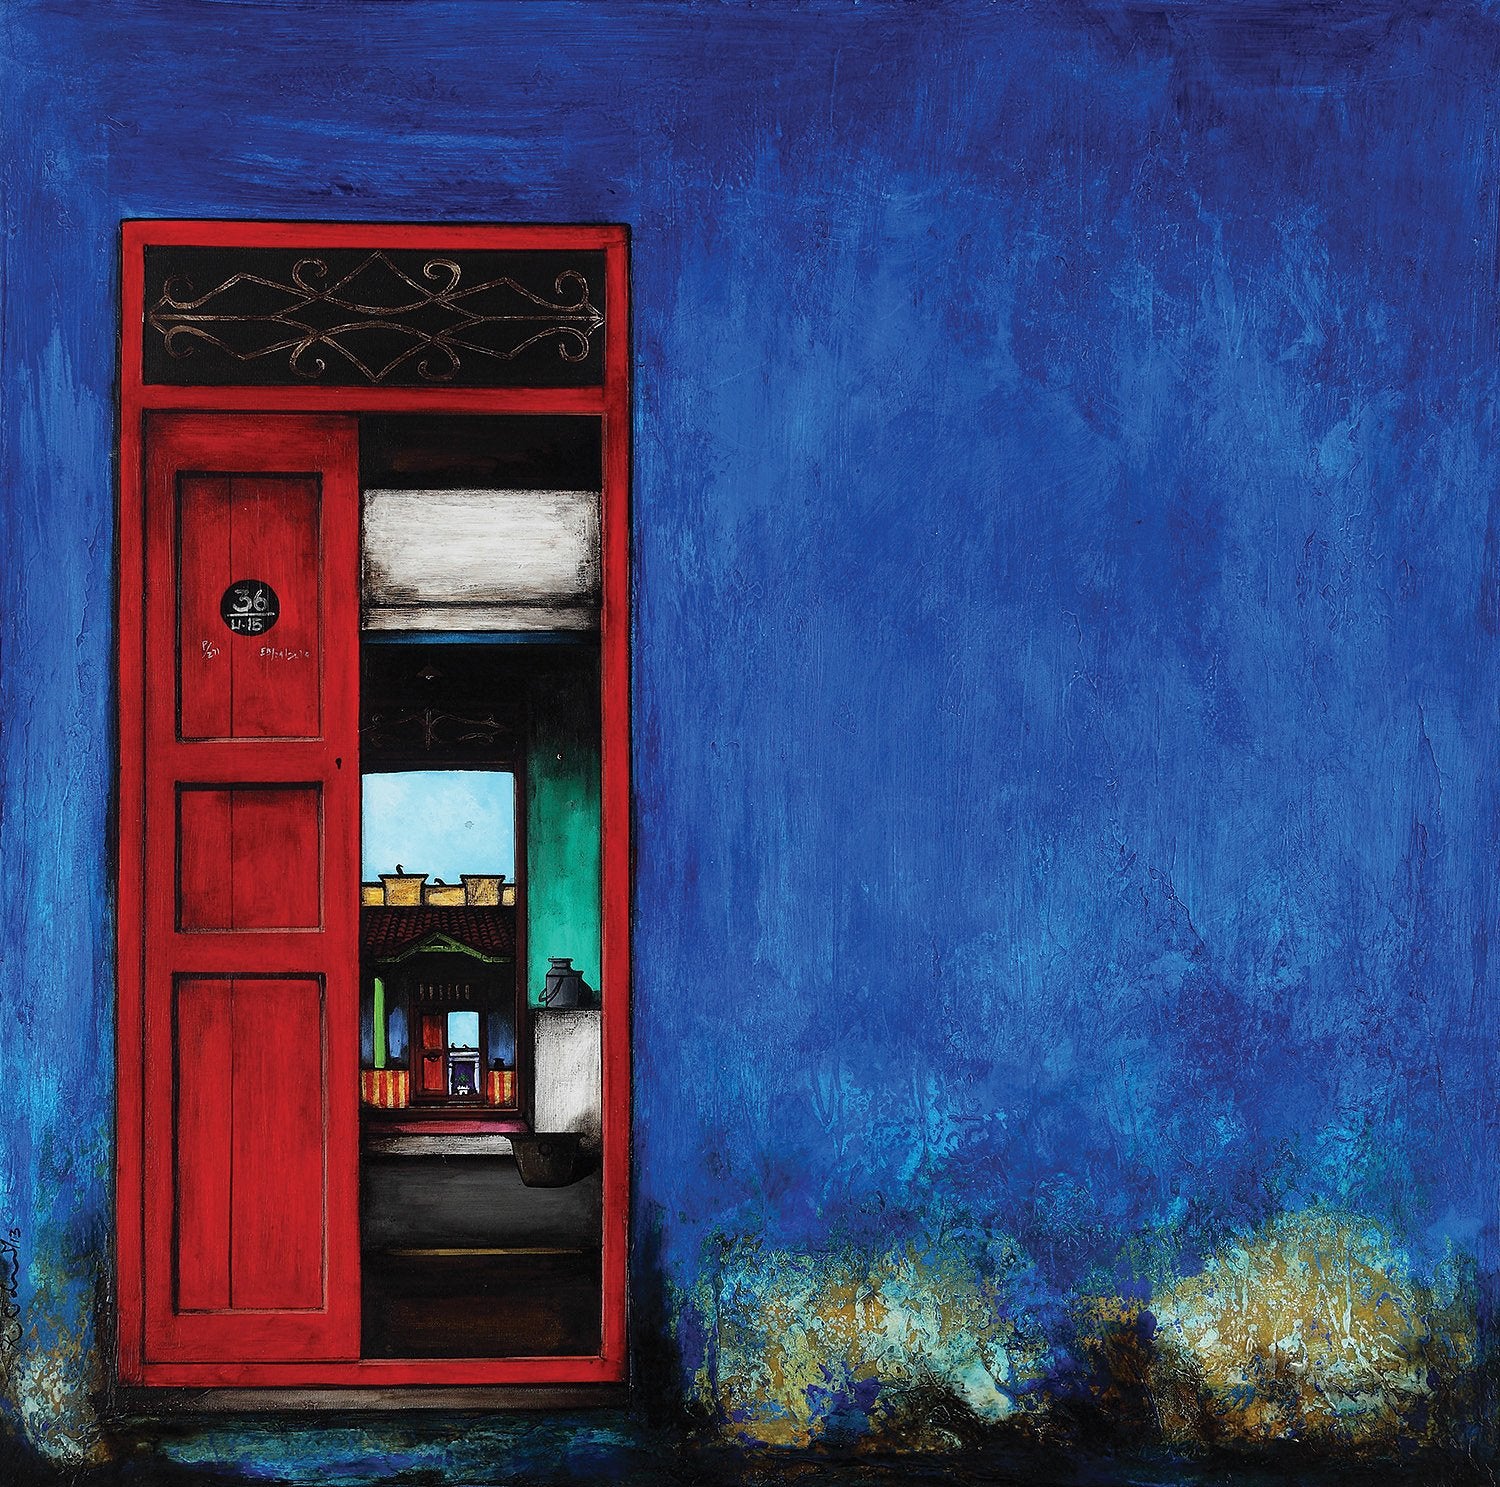 Door Series 21|K.R. Santhana Krishnan- Acrylic on Canvas, 2013, 36 x 36 inches